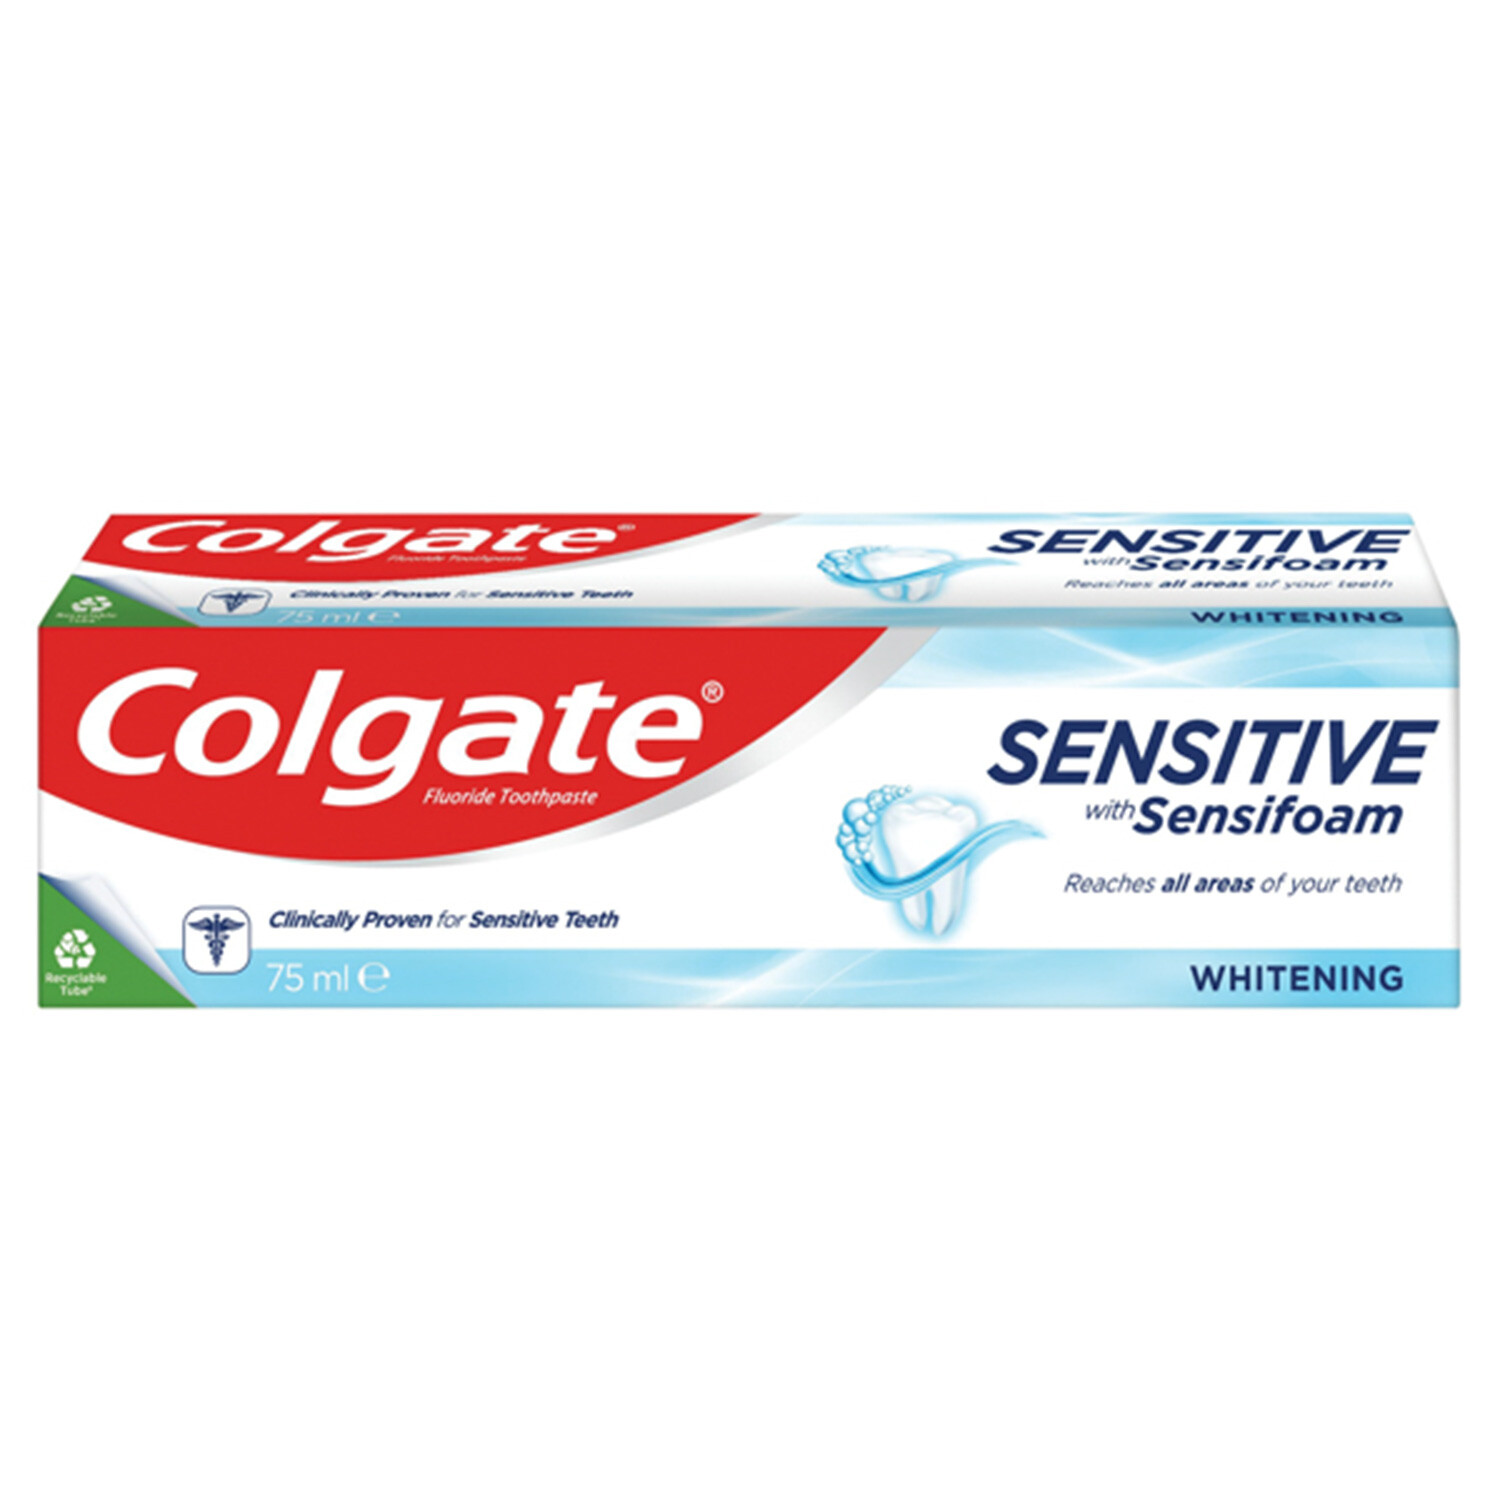 Colgate Sensitive Whitening Toothpaste - White Image